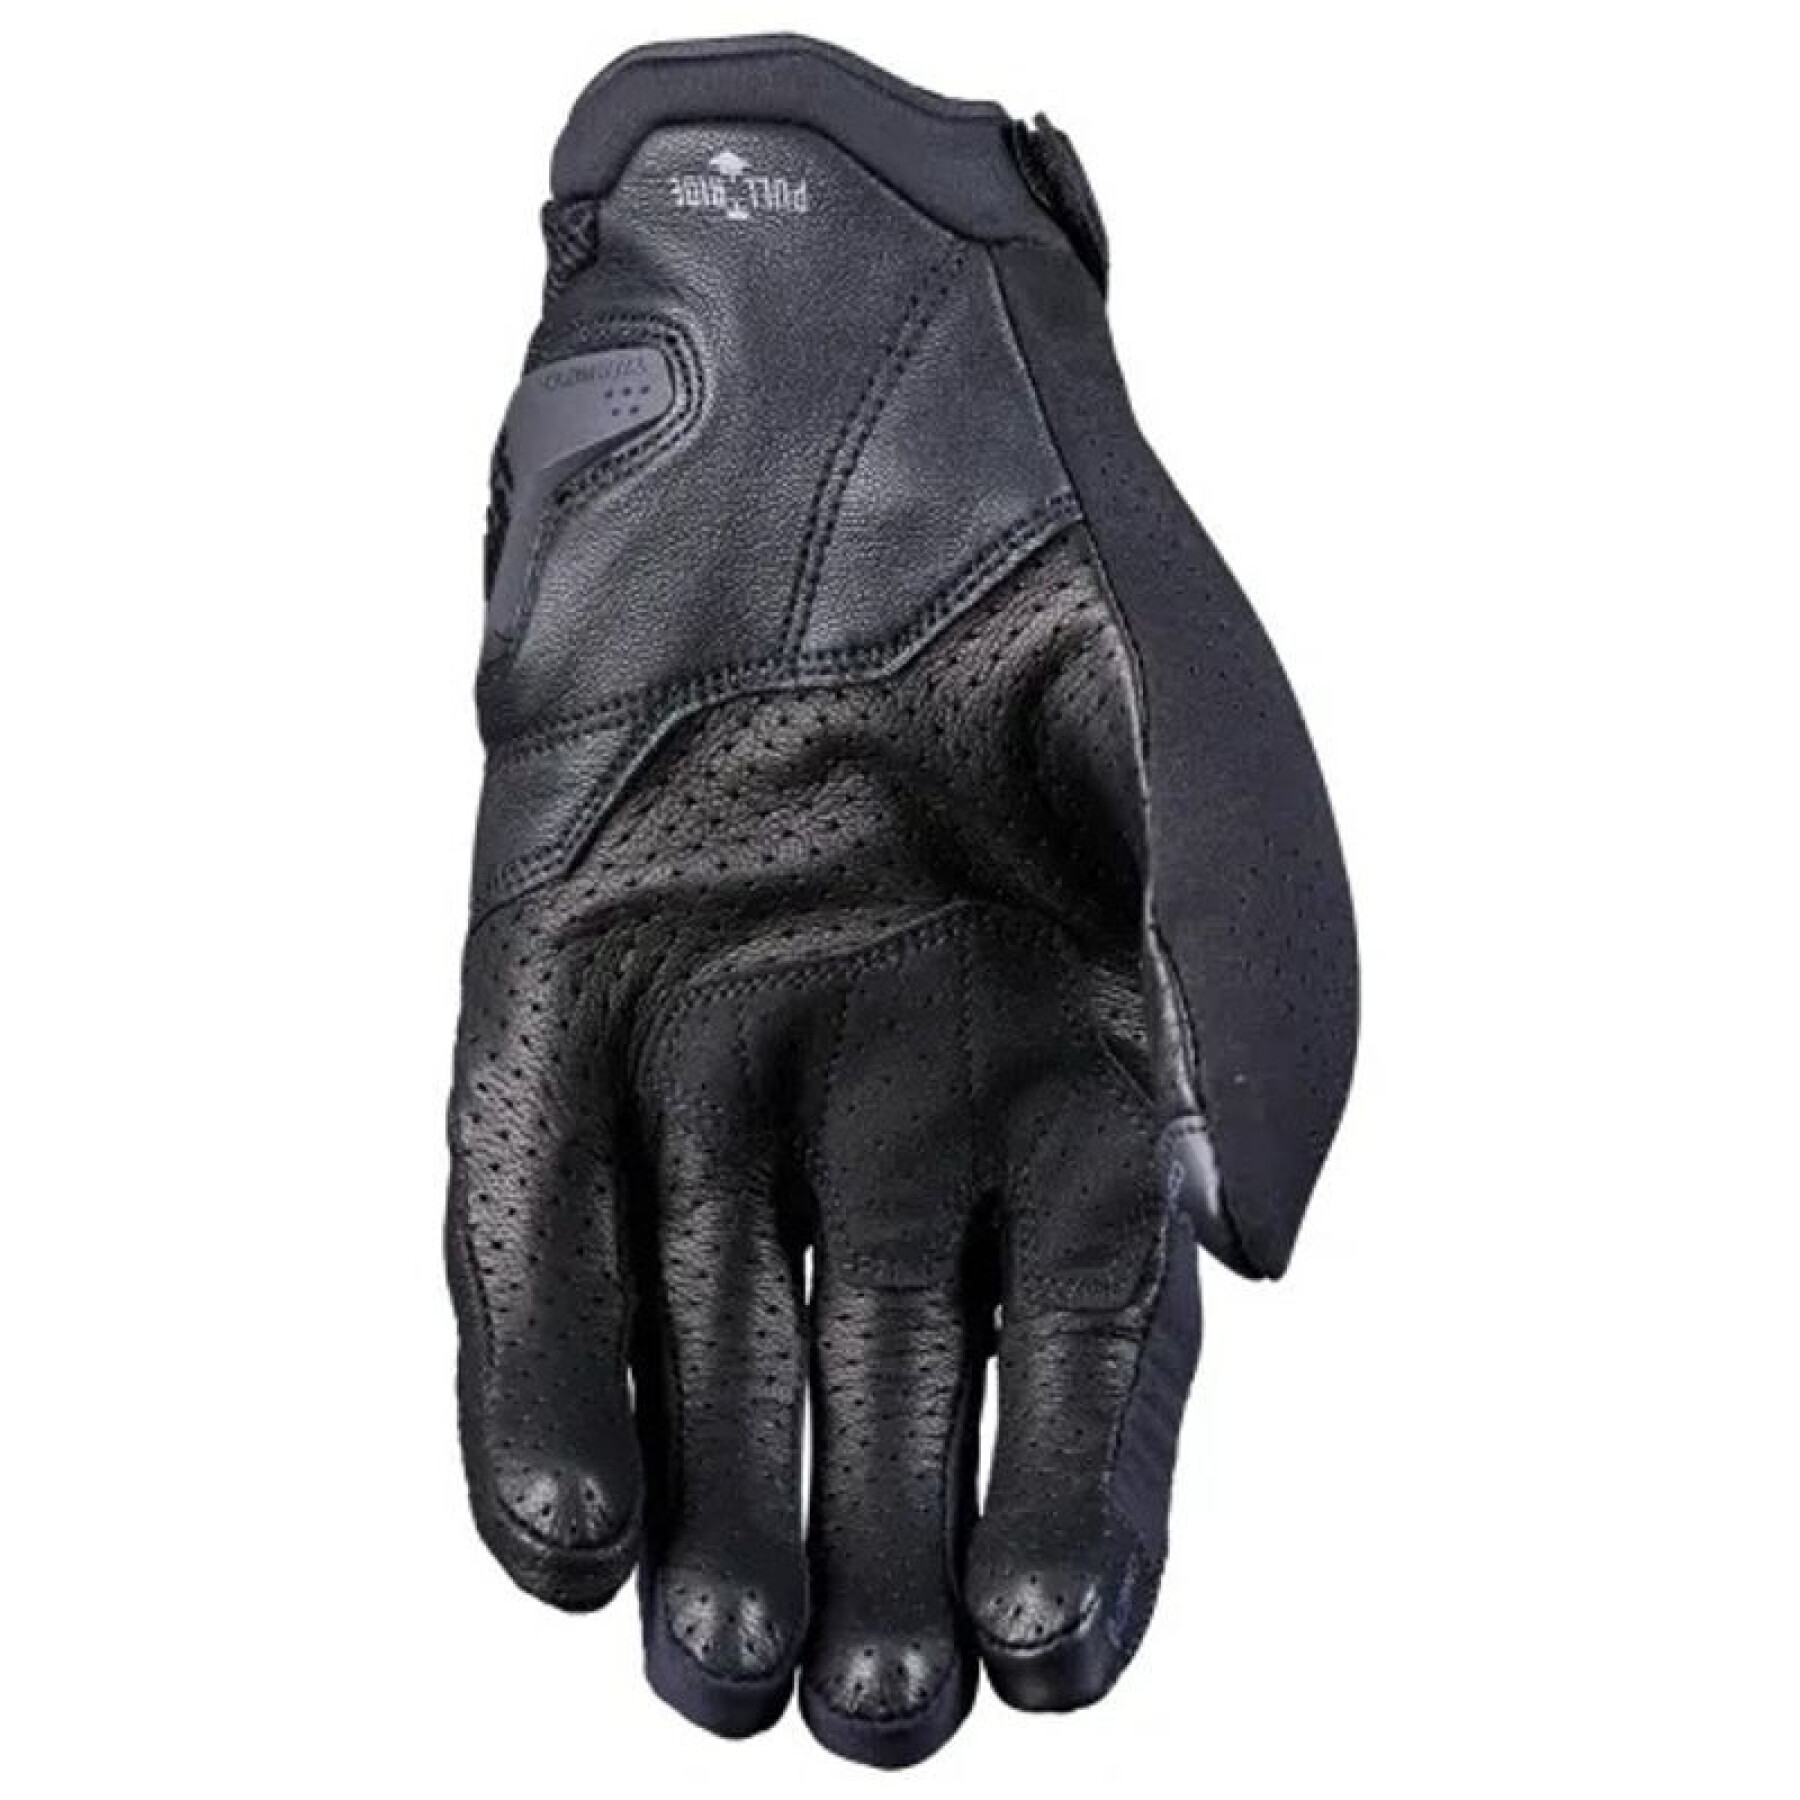 Women's motocross gloves Five Stunt Evo2 Airflow